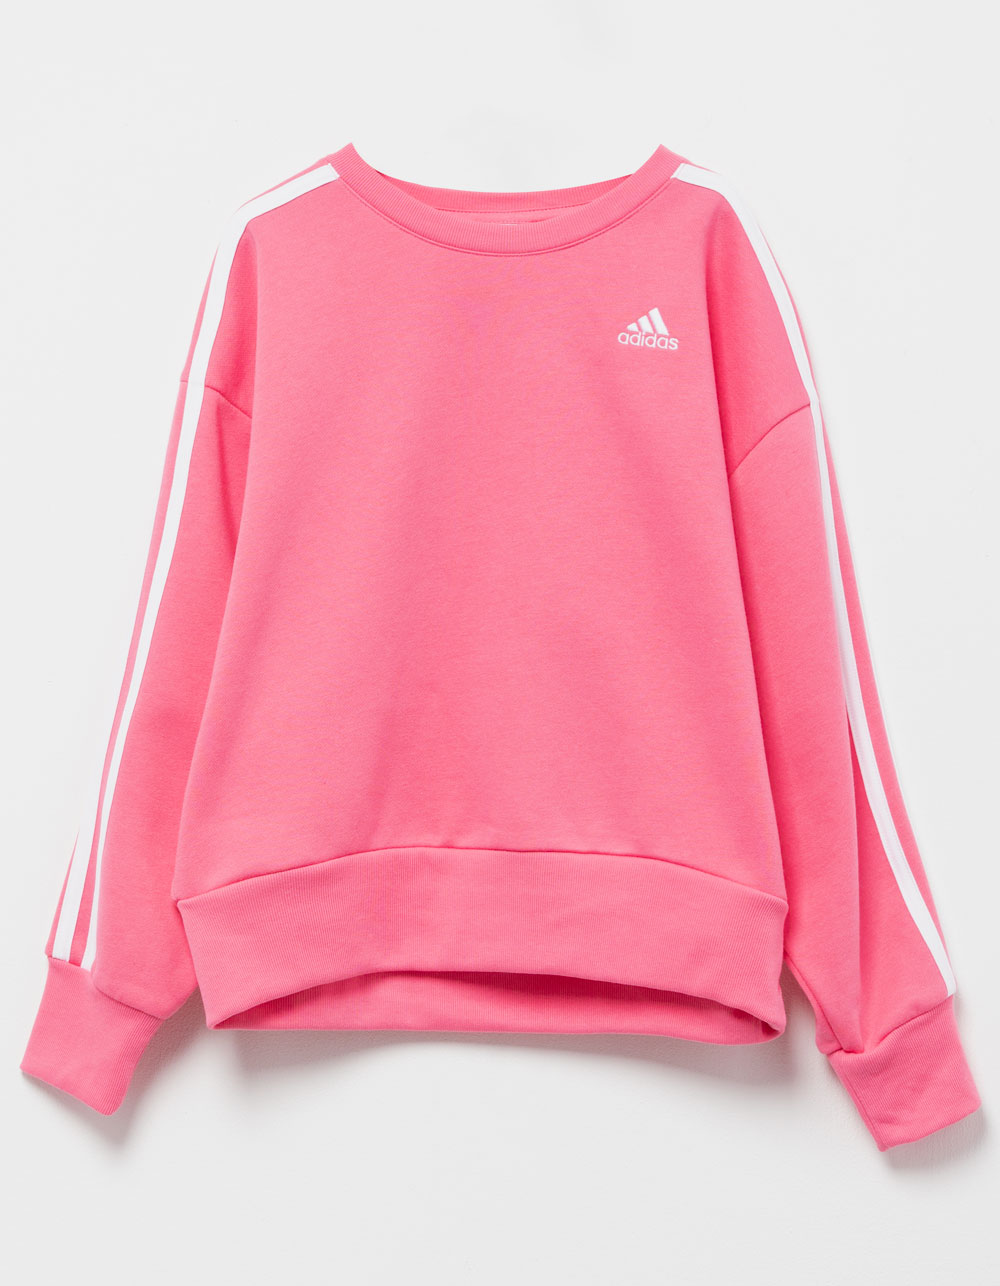 ADIDAS Essential 3-Stripe Girls Crewneck Sweatshirt - PINK